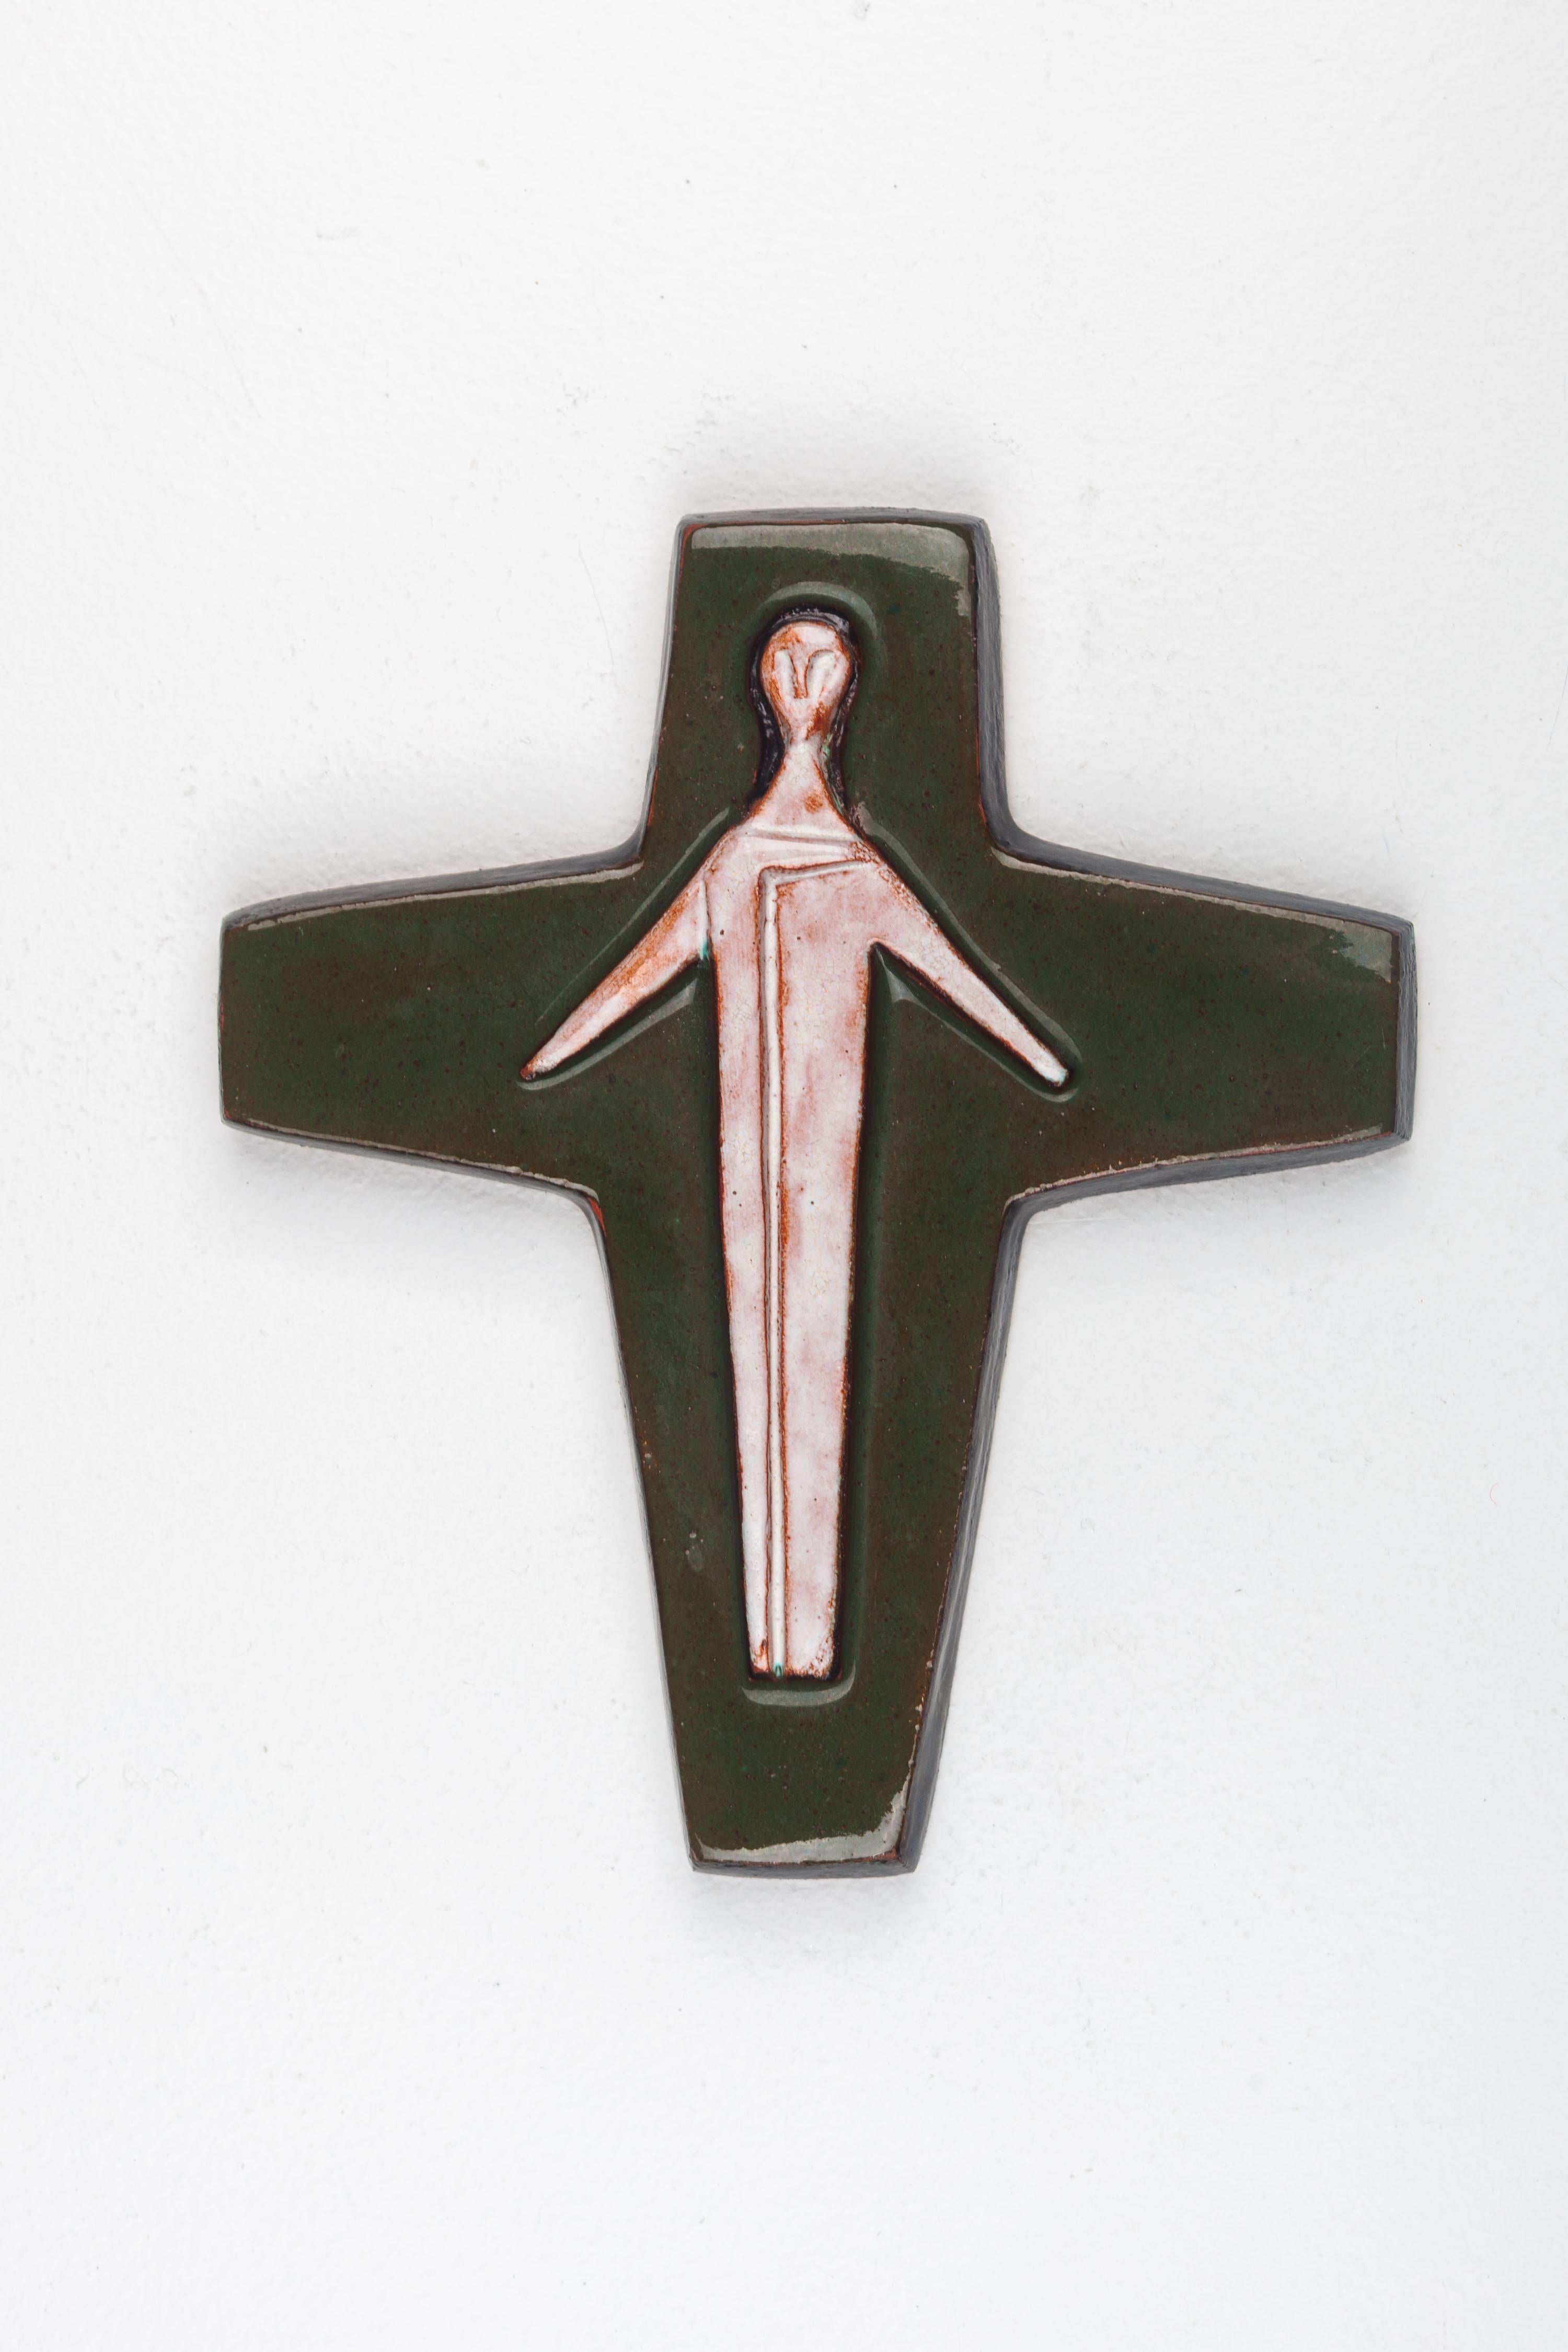 Midcentury European Glossy Ceramic Cross - Otherworldly Christ Figure For Sale